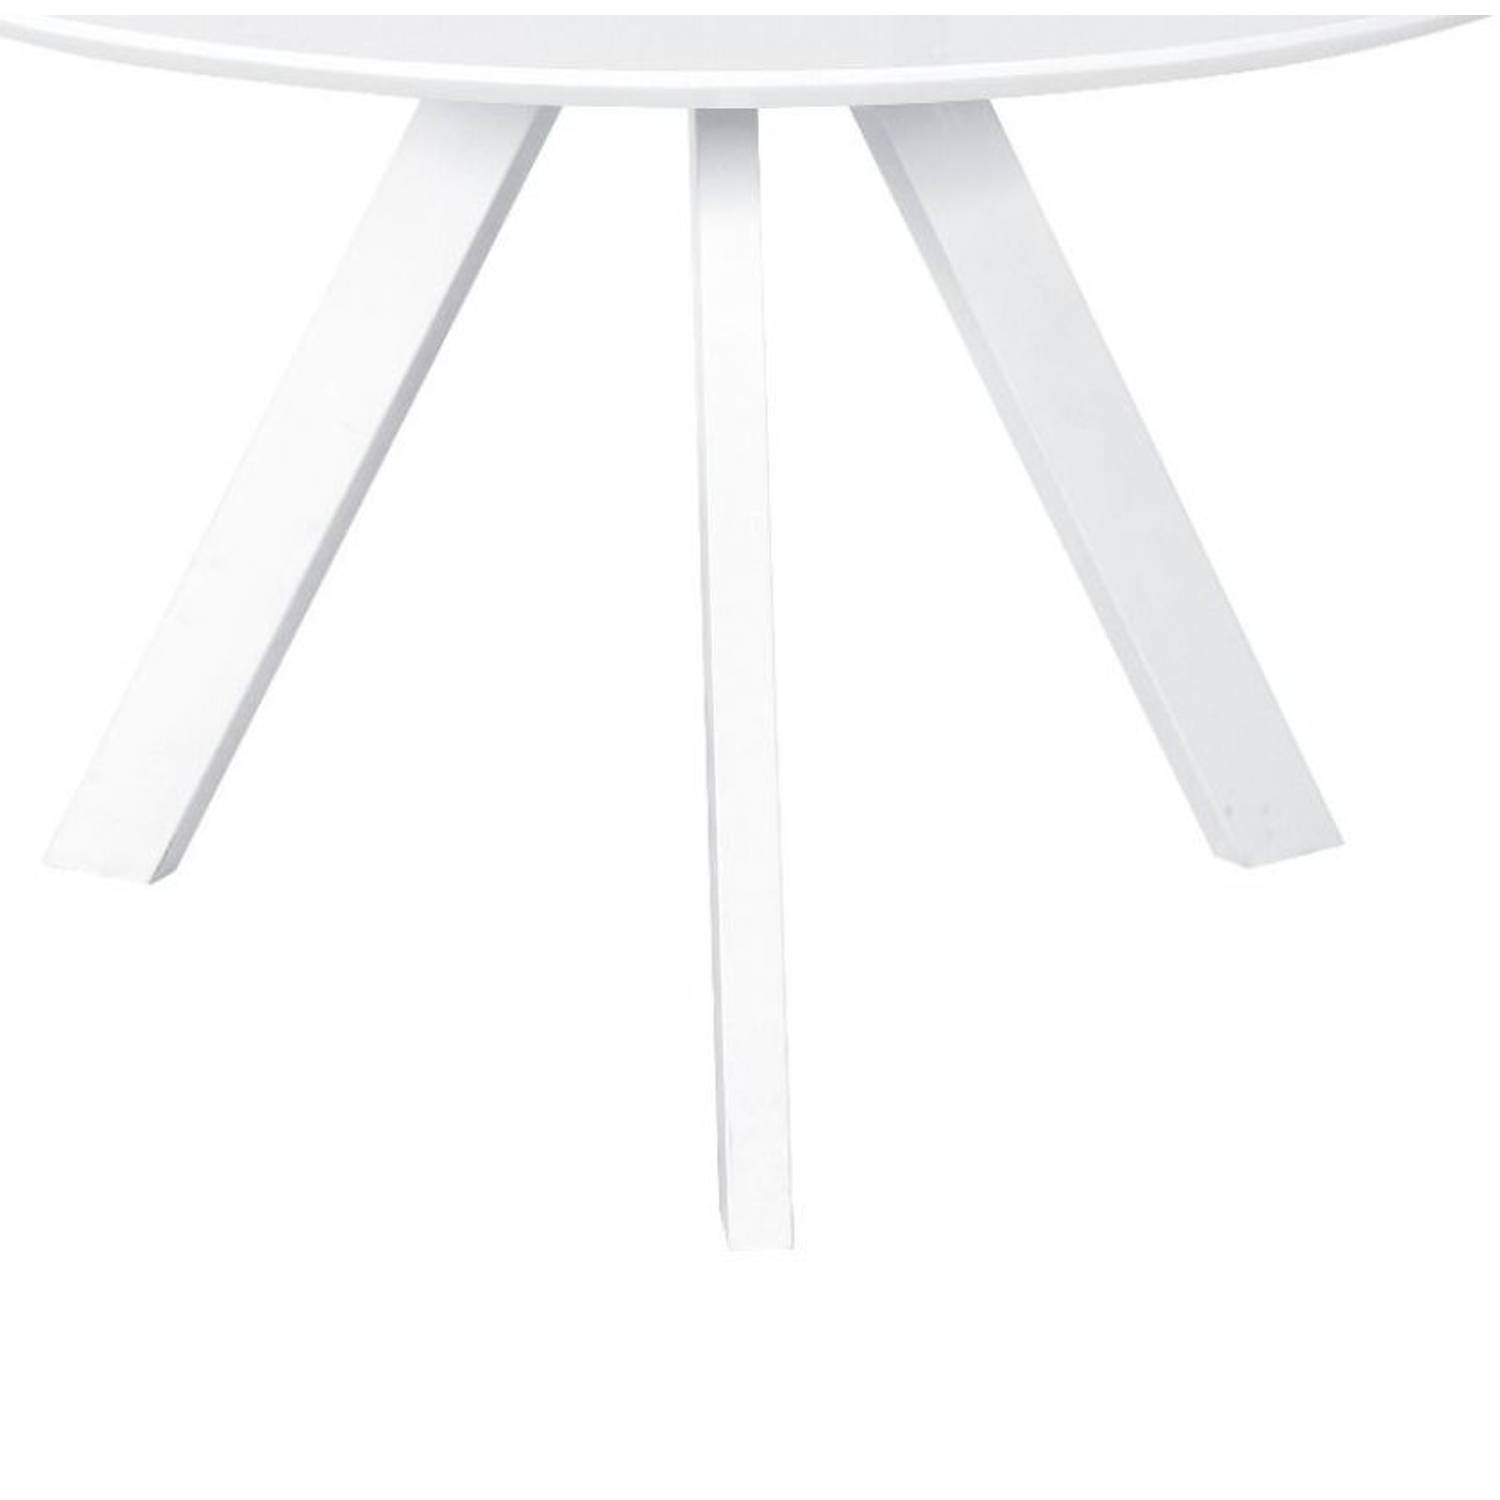 krater Componist plastic Eettafel rond Ronsi wit 120cm ronde eettafel | Blokker